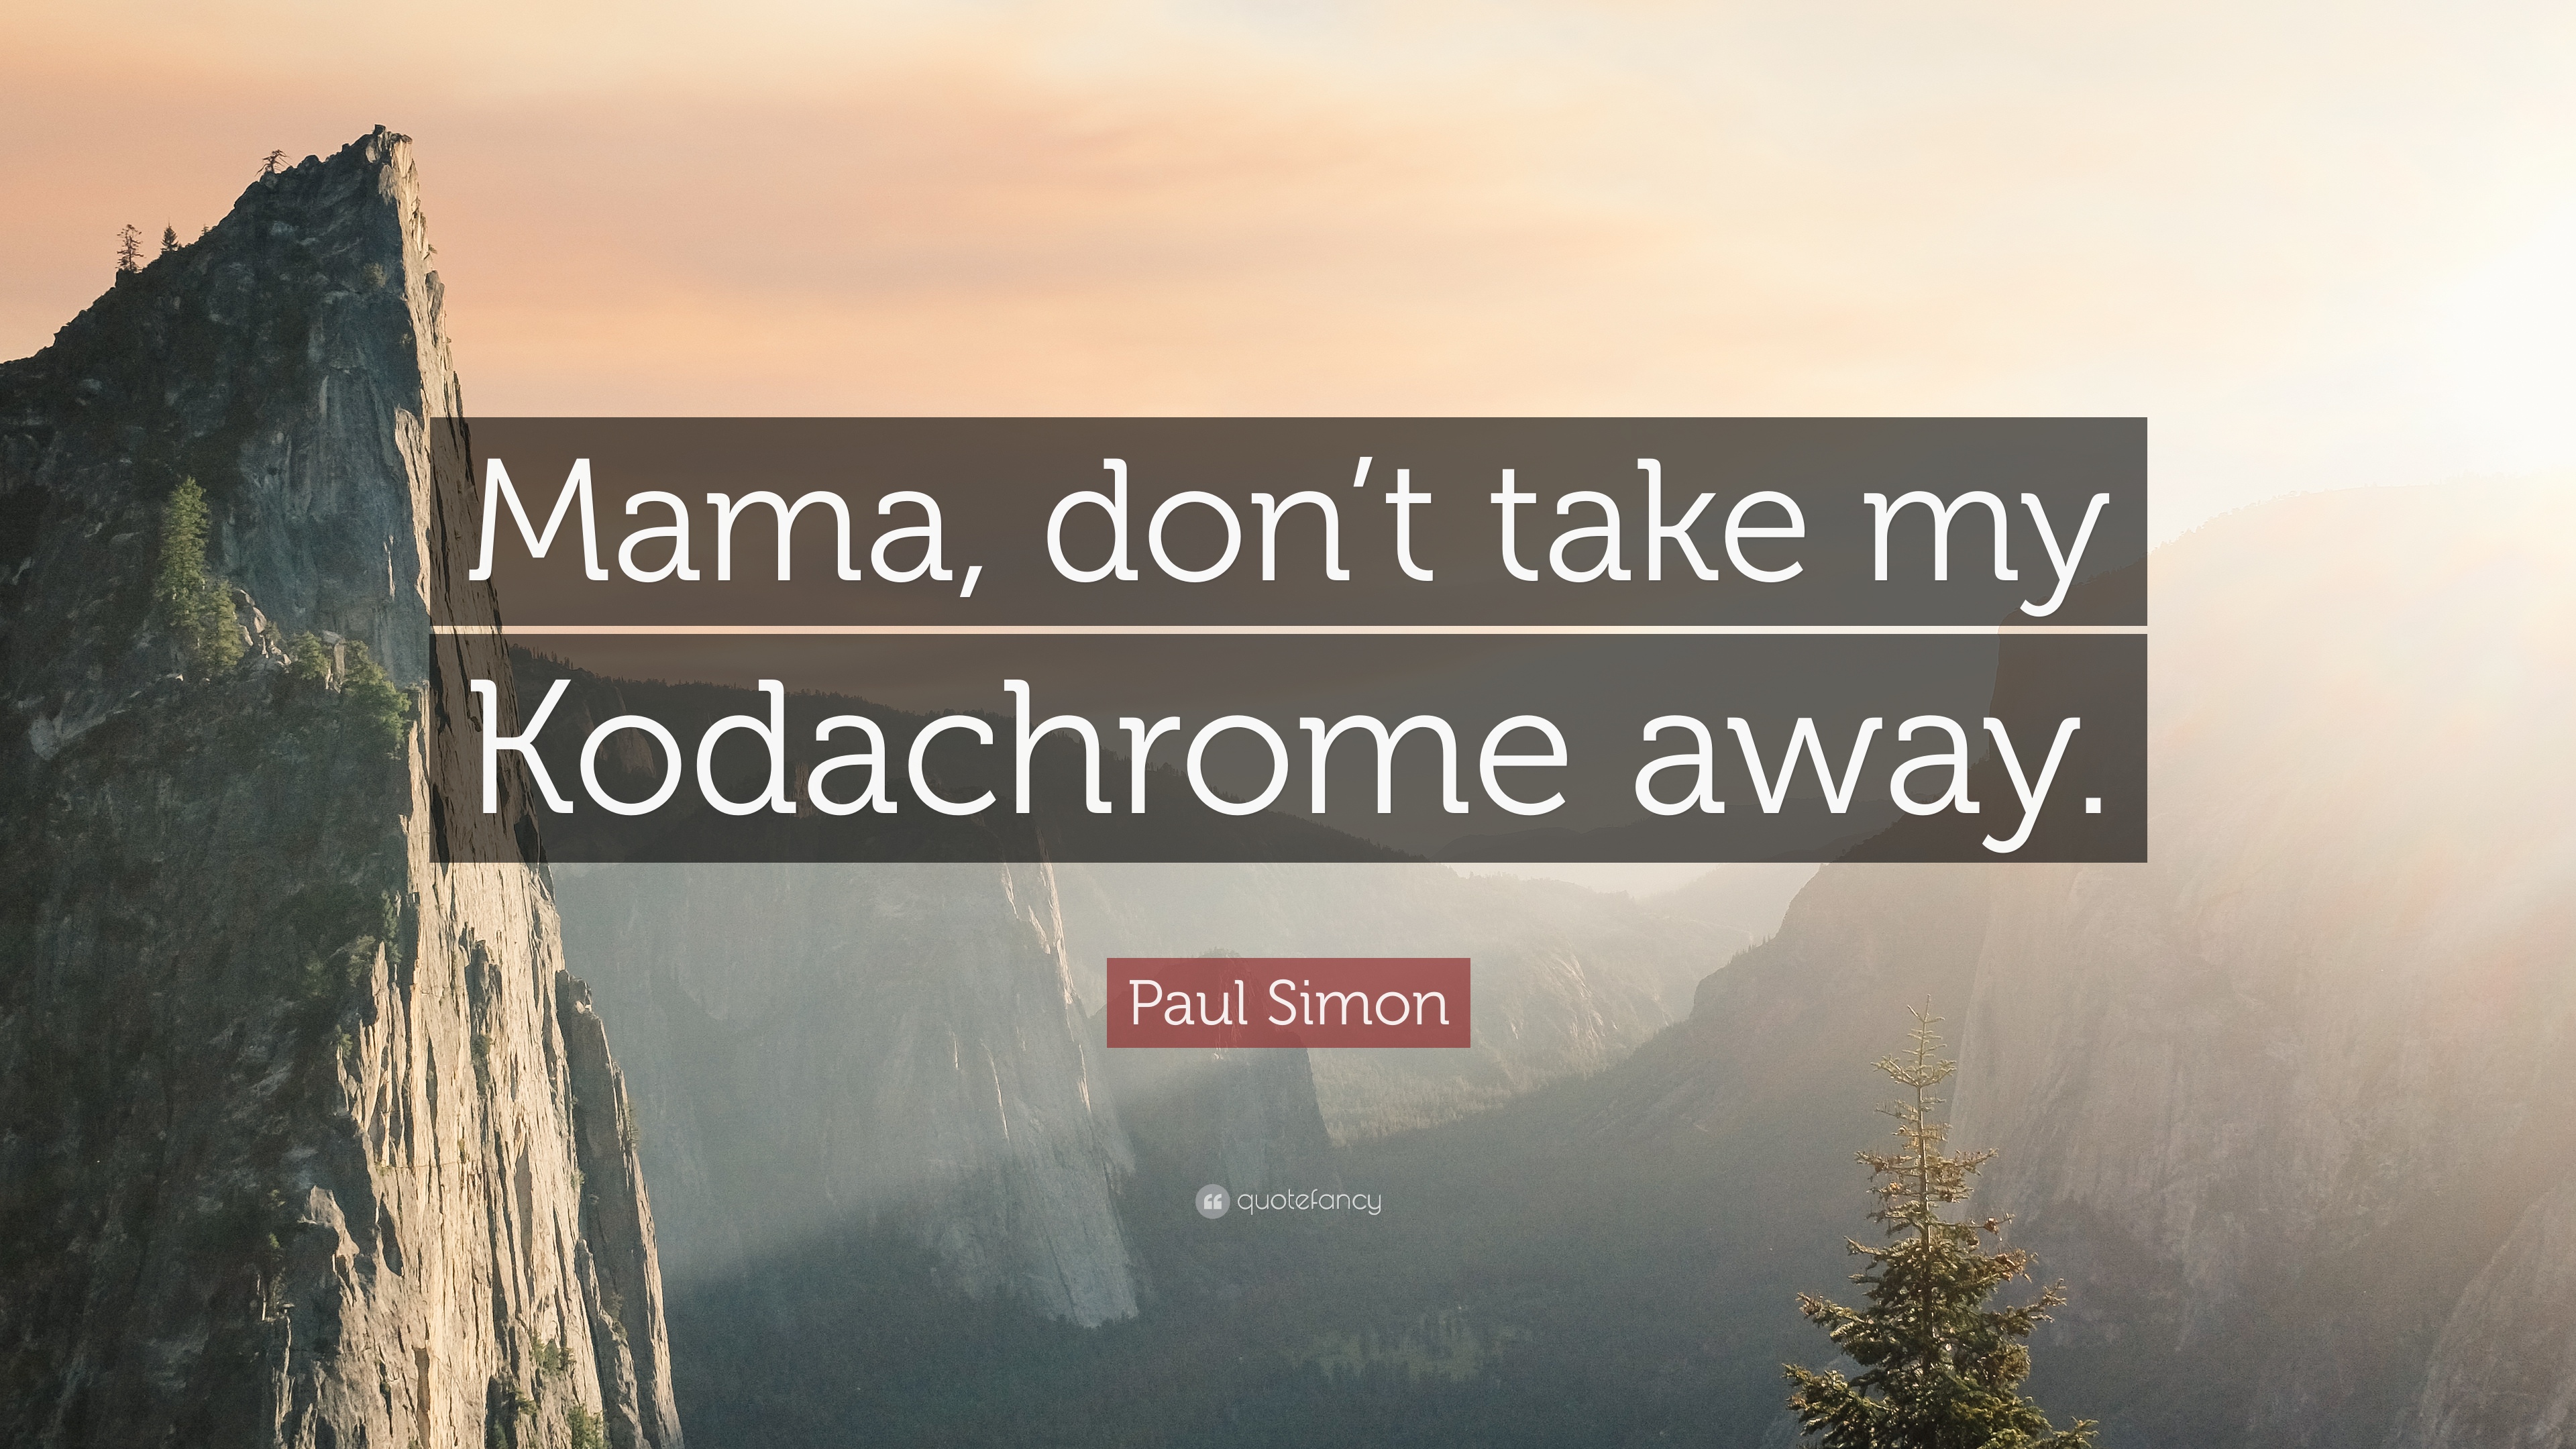 Paul Simon Quote: “Mama, don't take my Kodachrome away.” 9